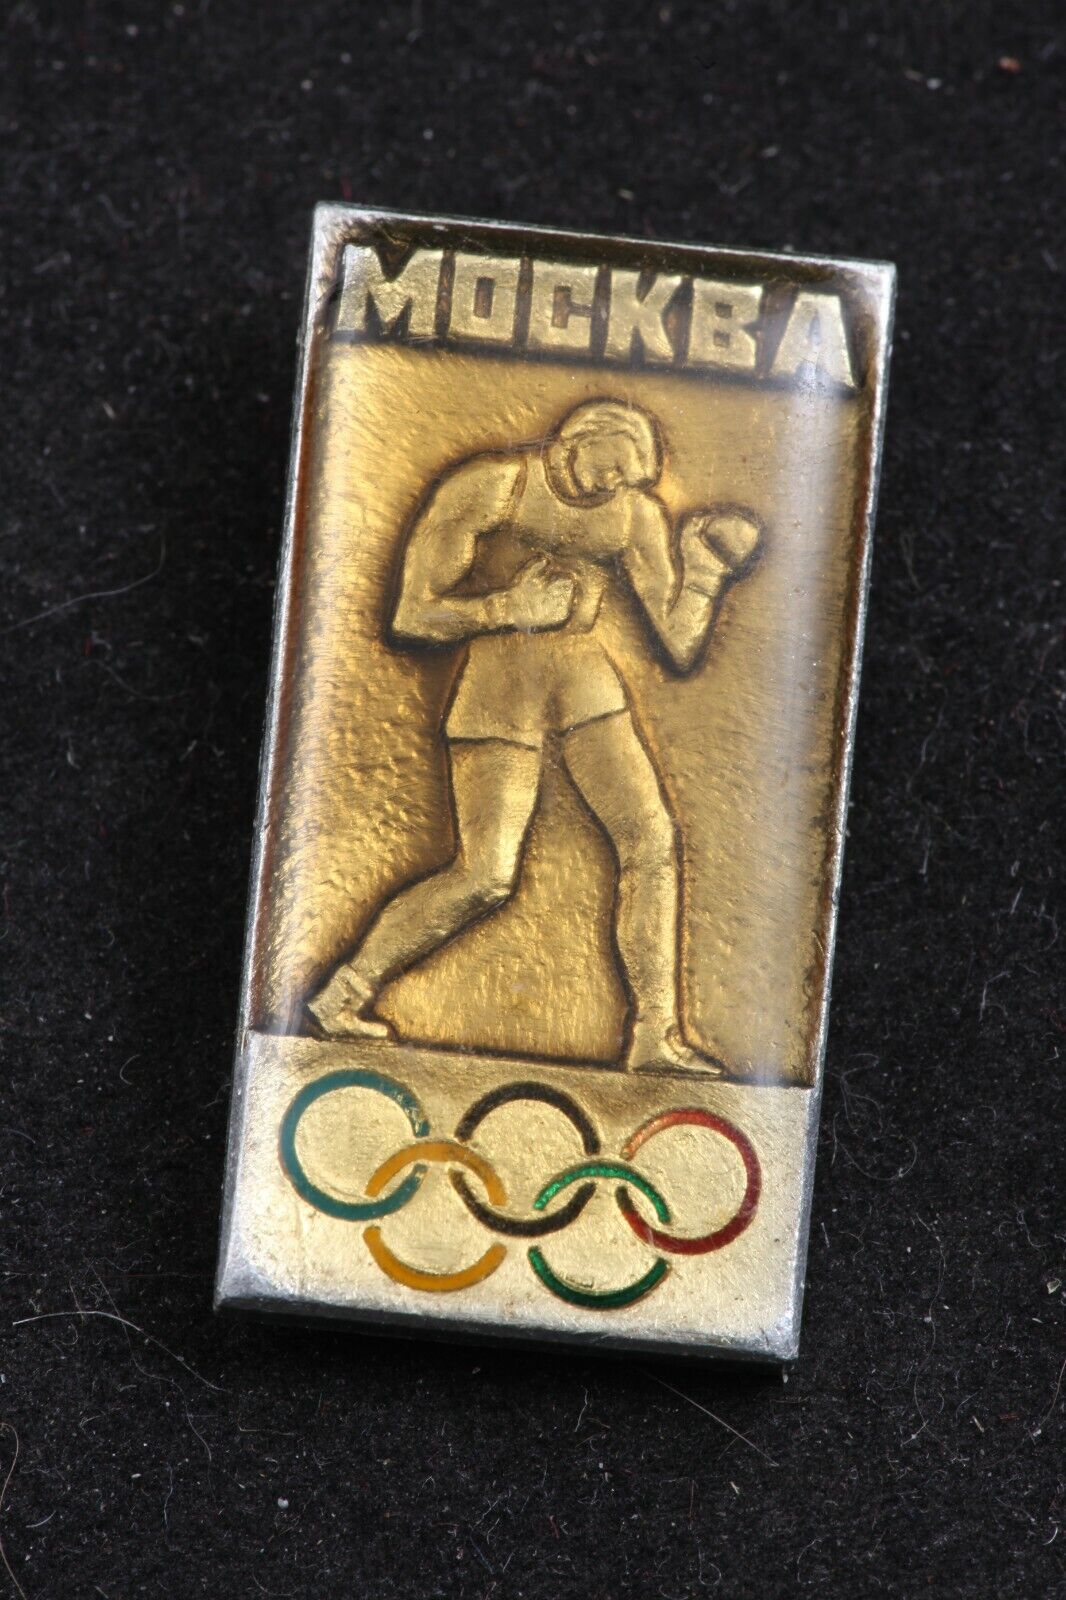 Soviet Boxing Boxer Pugilistics 1980 Moscow Summer Olympics badge pin USSR